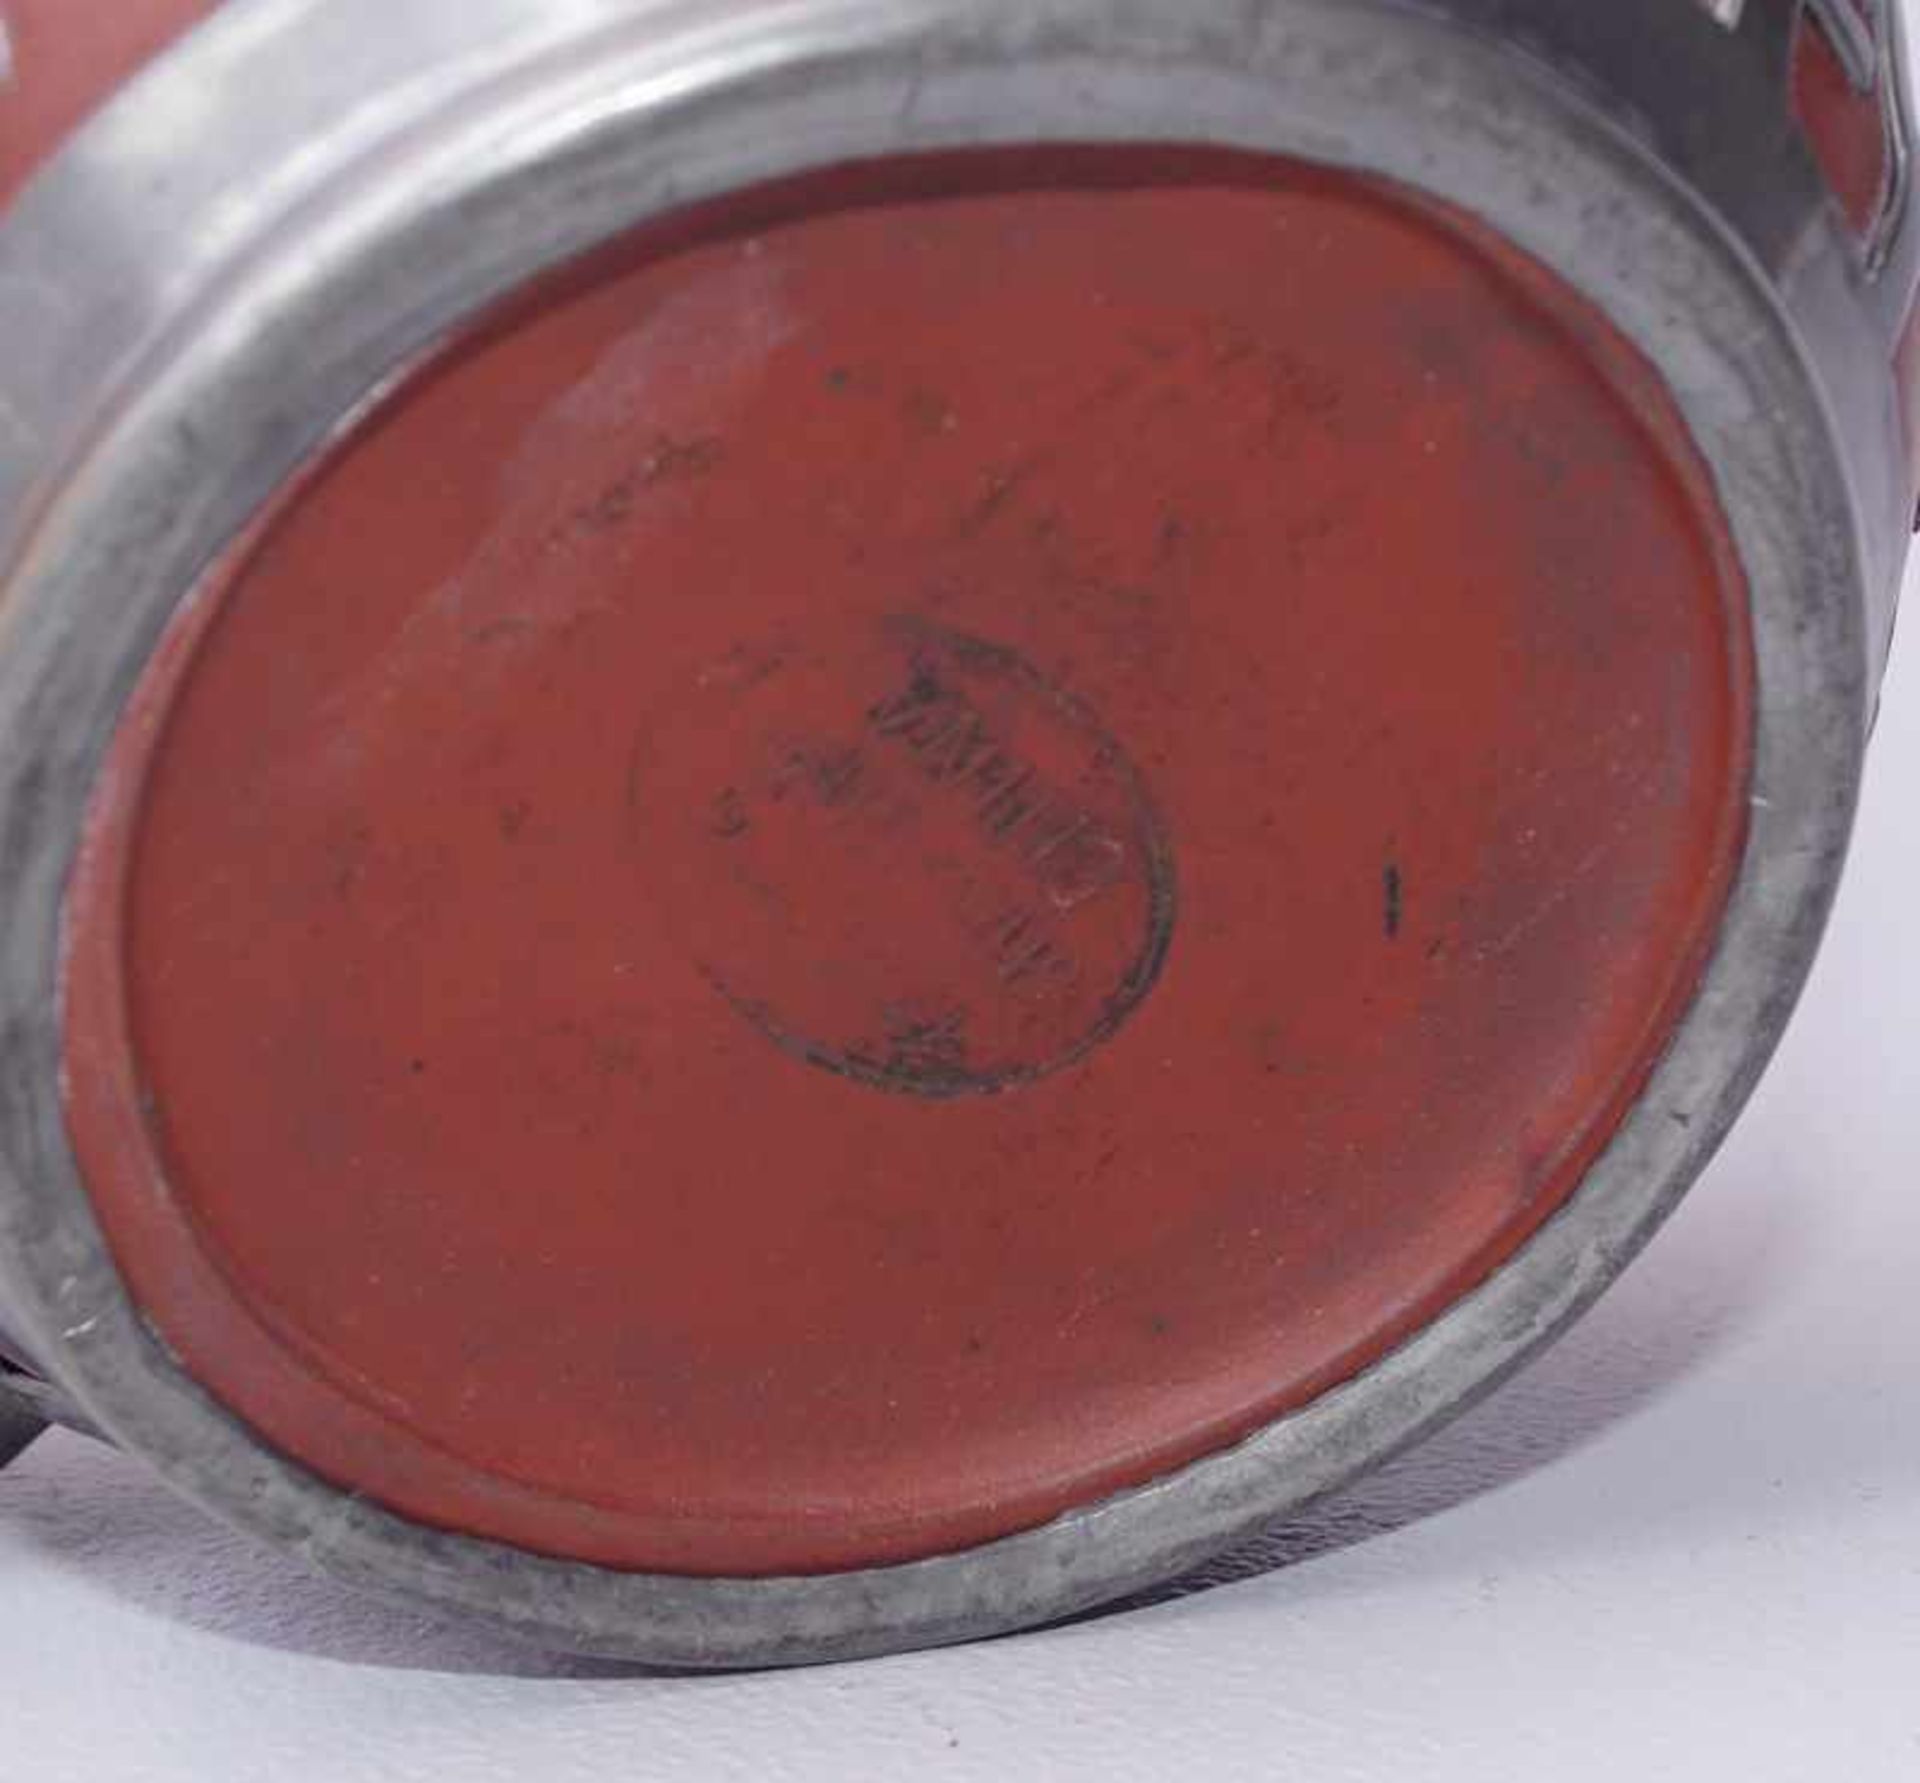 Teekanne, China (Shanghai) Ende 19.Jhd. rot-braune Keramik, innen lichtgrau glasiert mit - Image 2 of 2